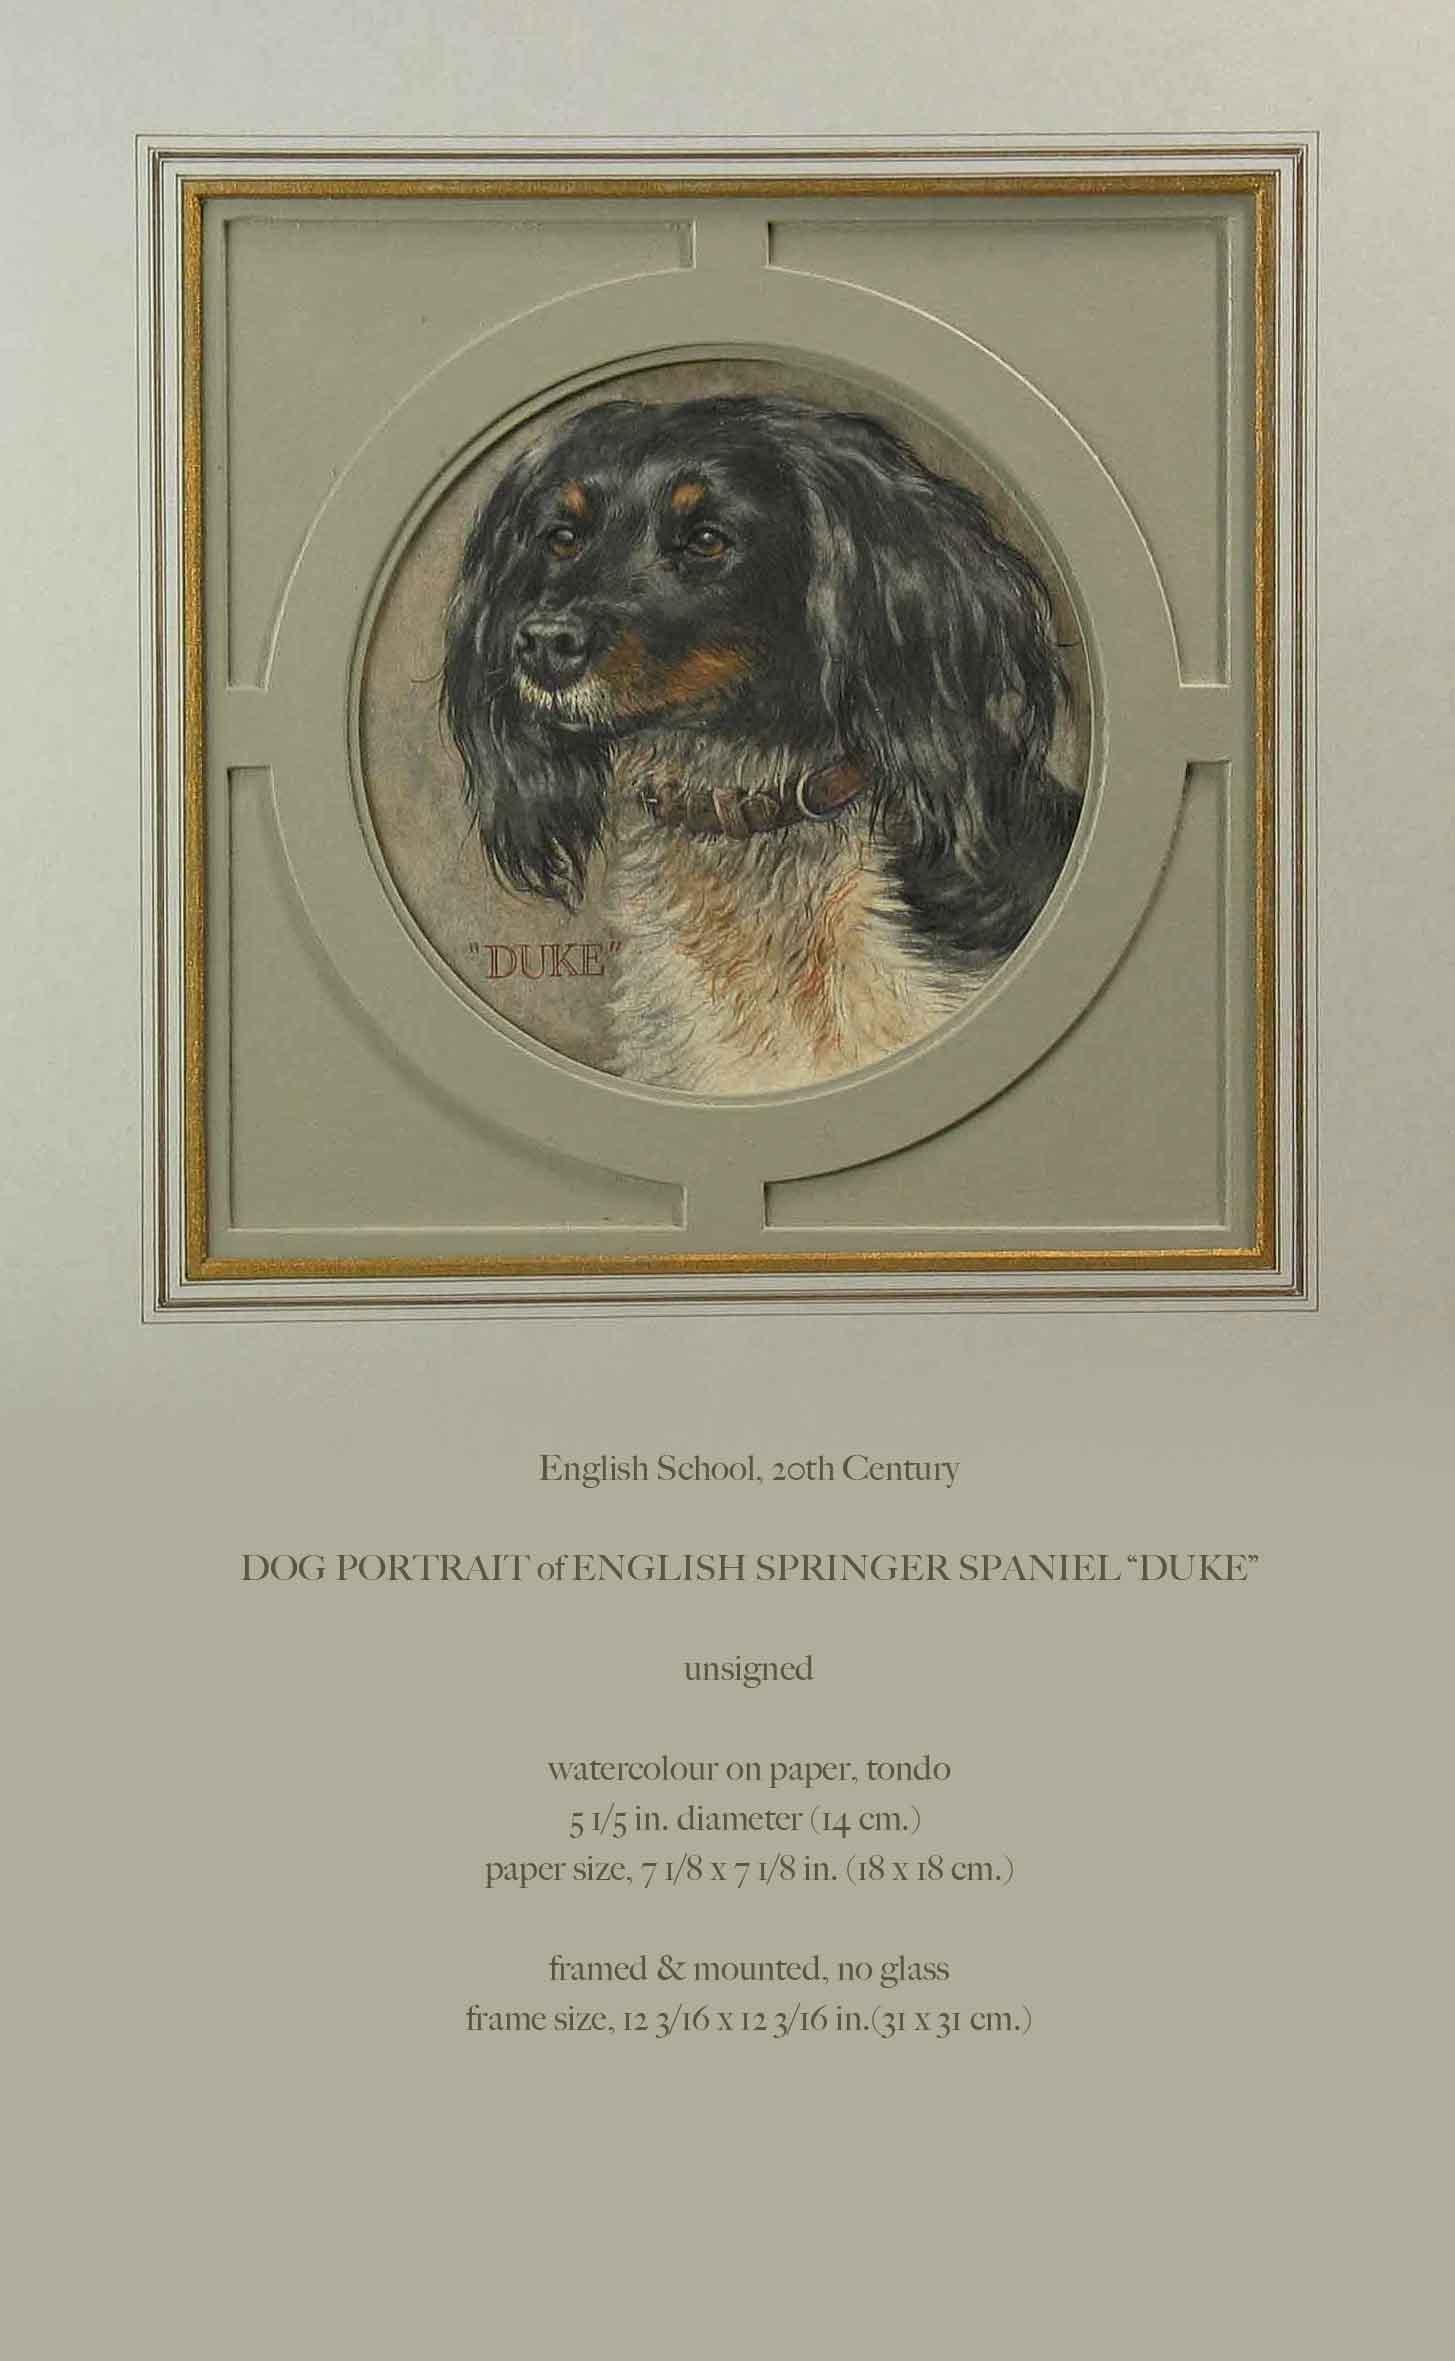 A dog portrait of English Springer Spaniel 